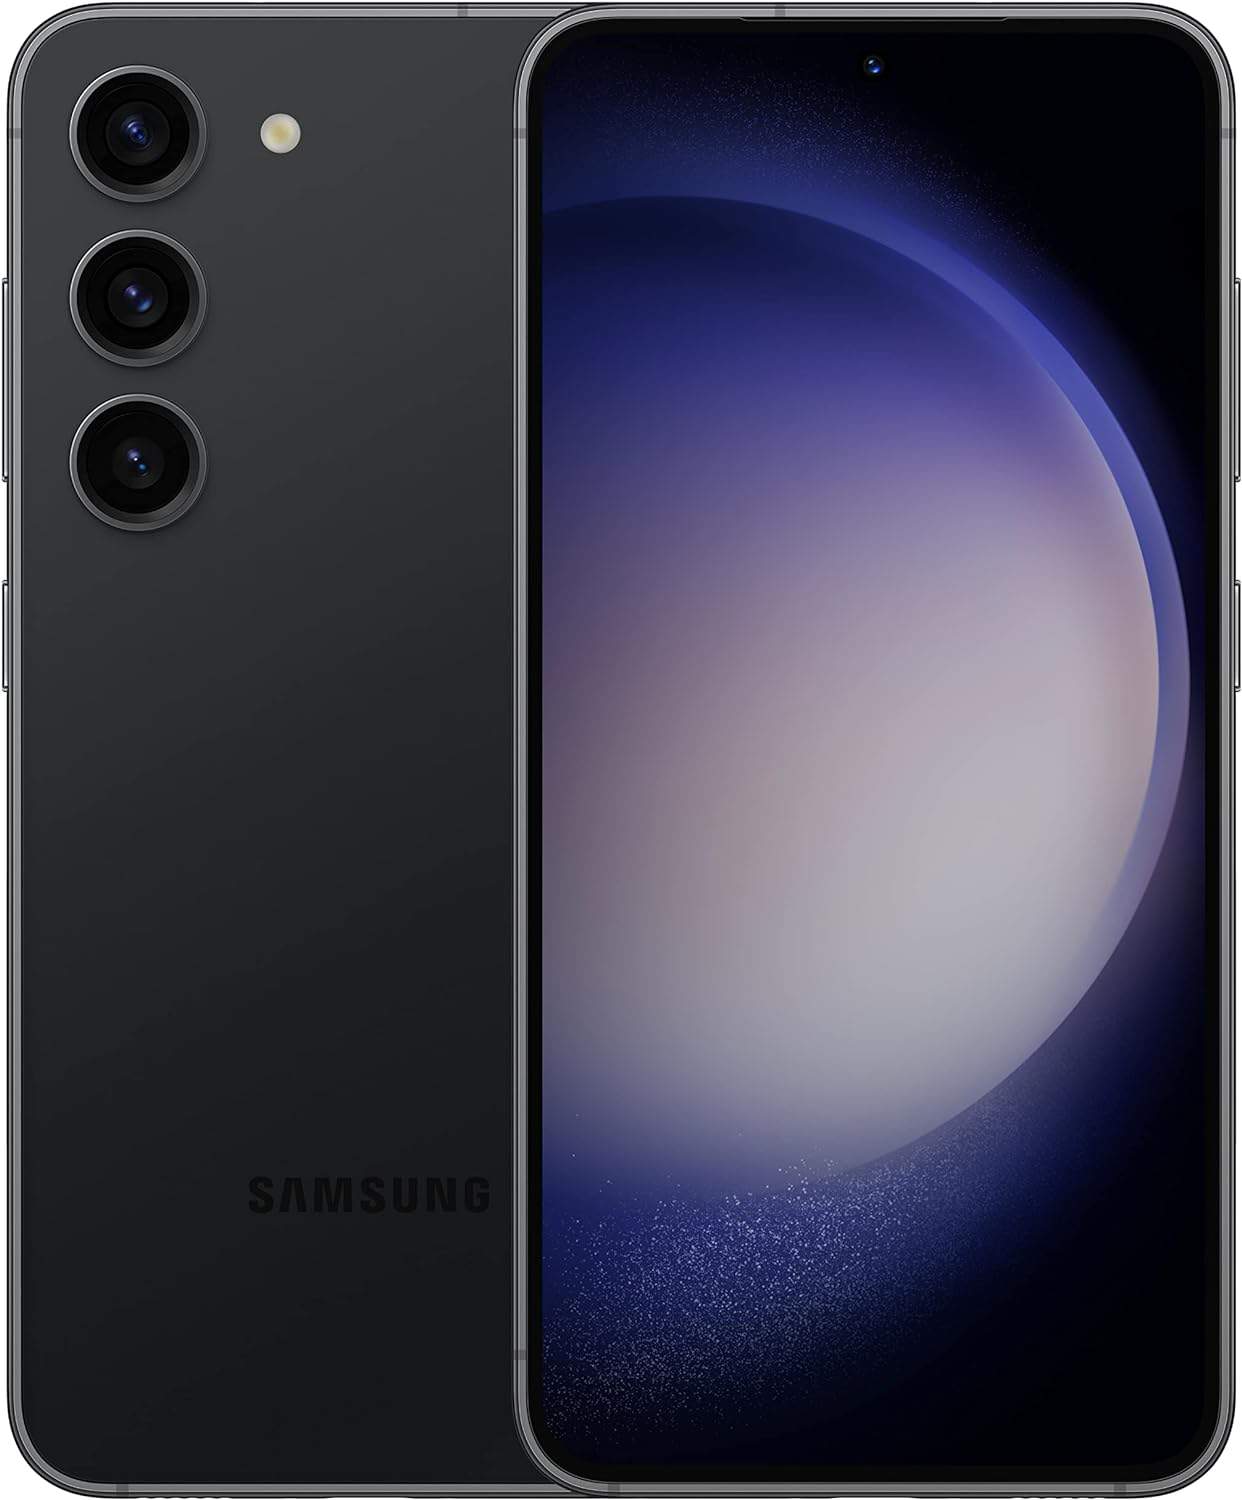 Samsung galaxy s10e 64gb black.